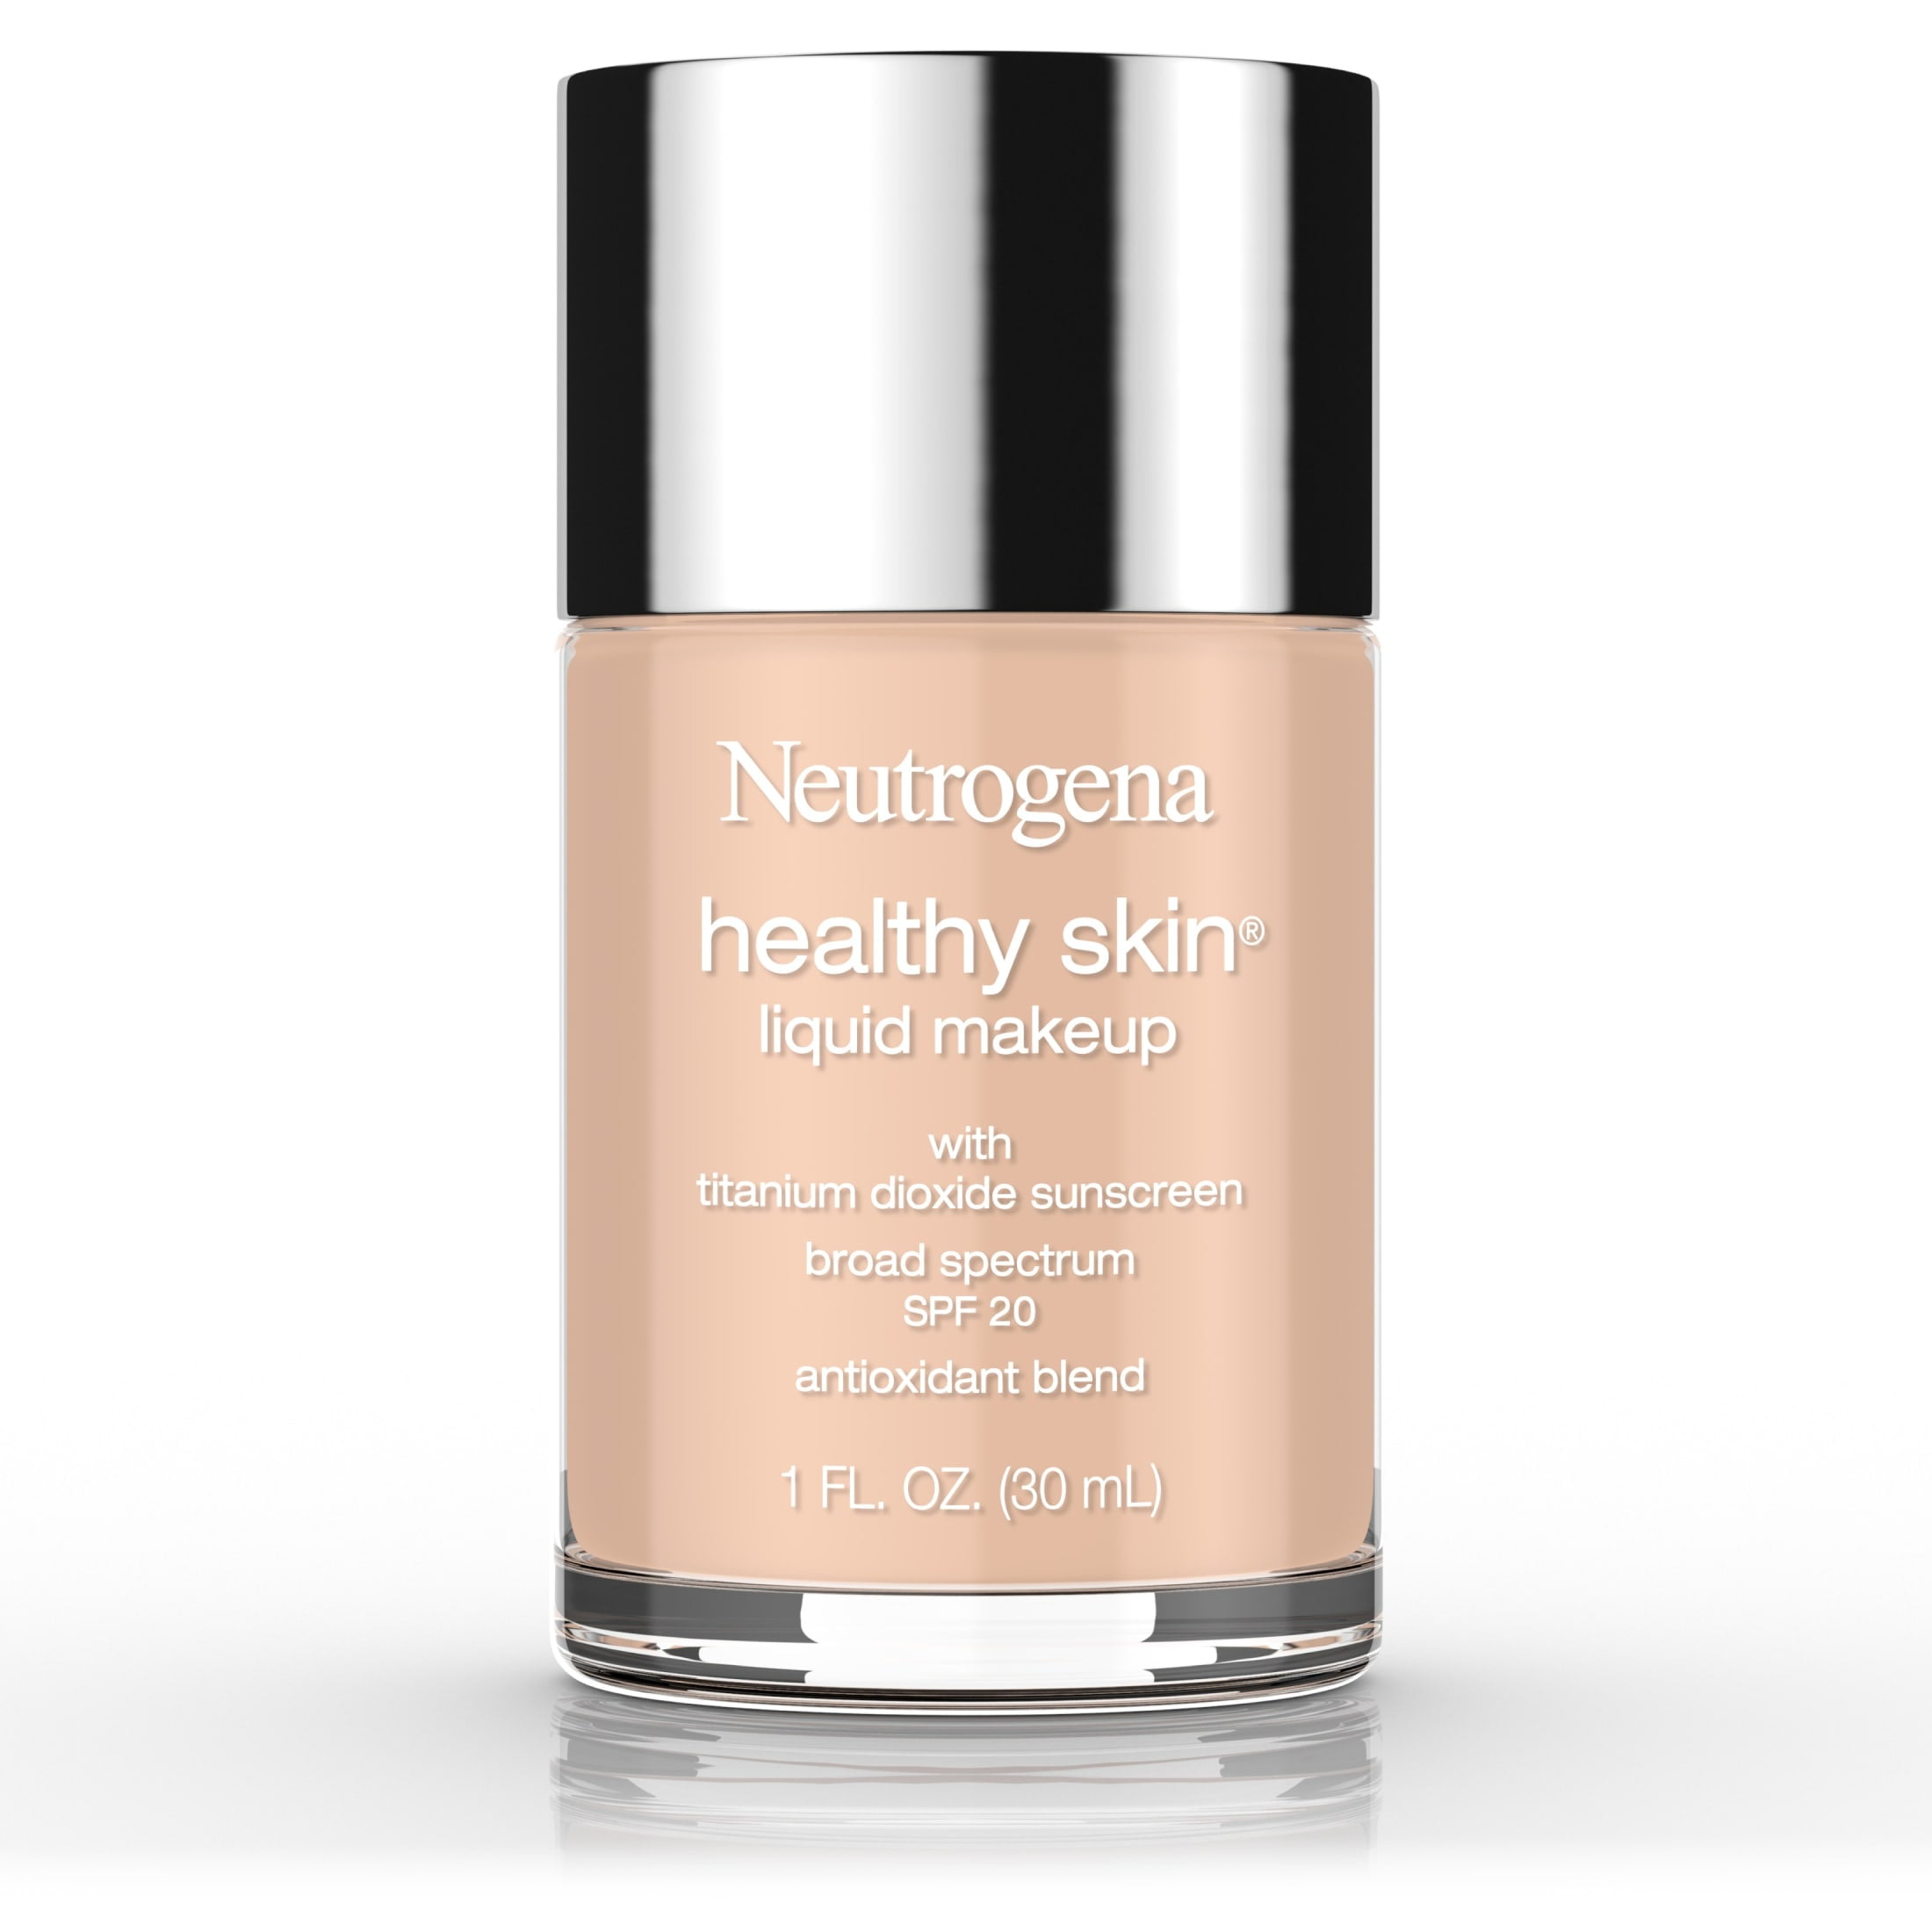 oz 1 Neutrogena Healthy Beige, Liquid Skin 50 fl. Makeup Foundation, Soft